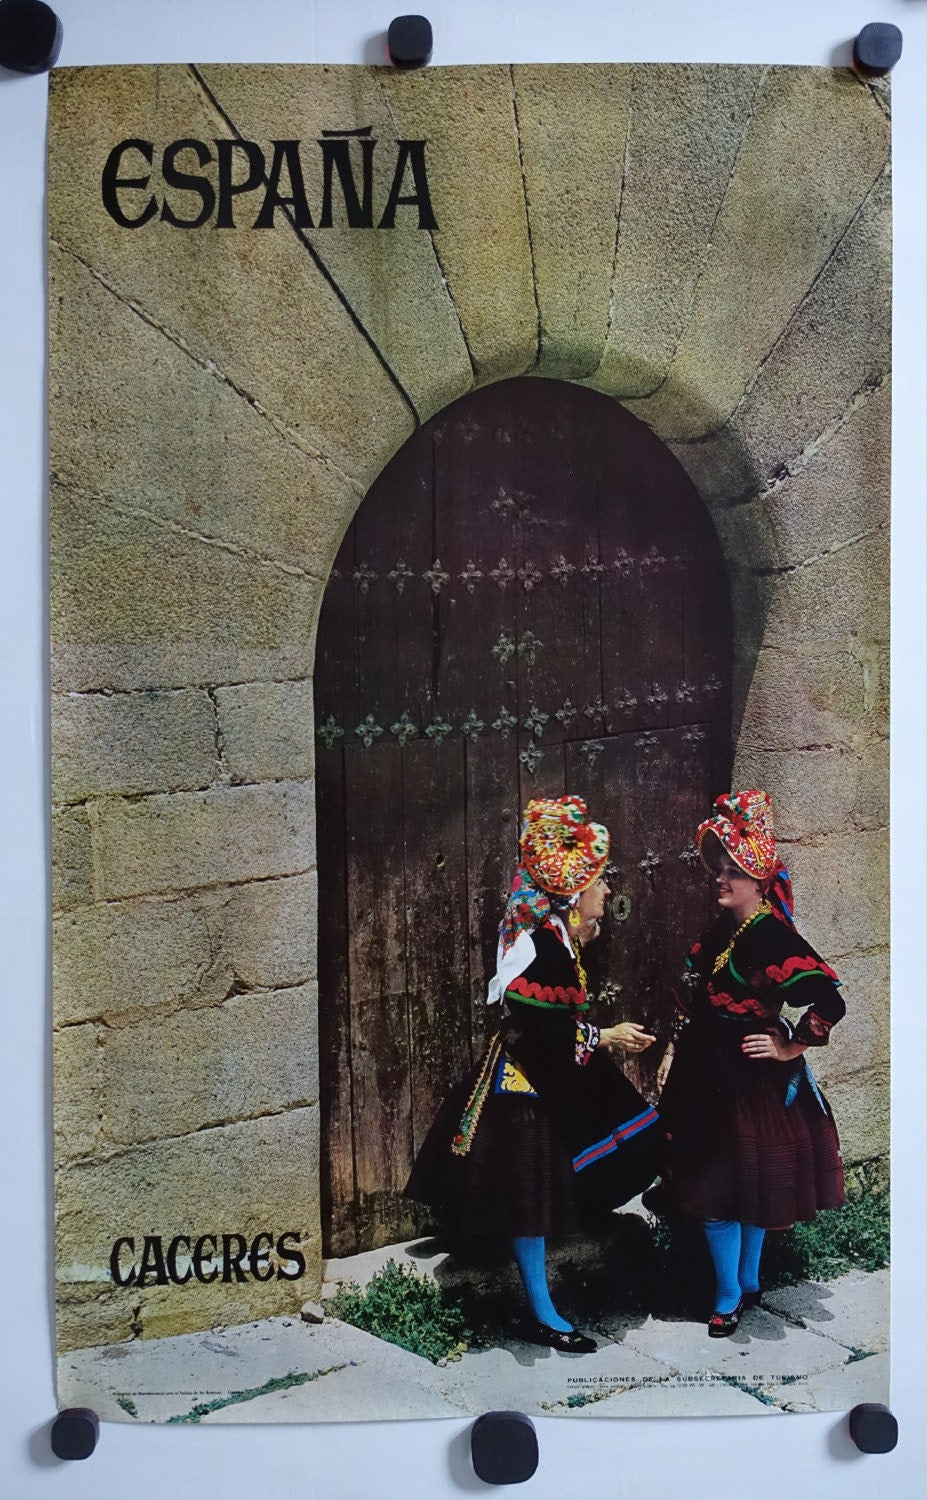 1965 Spain Travel Poster (Cáceres) - Original Vinage Poster